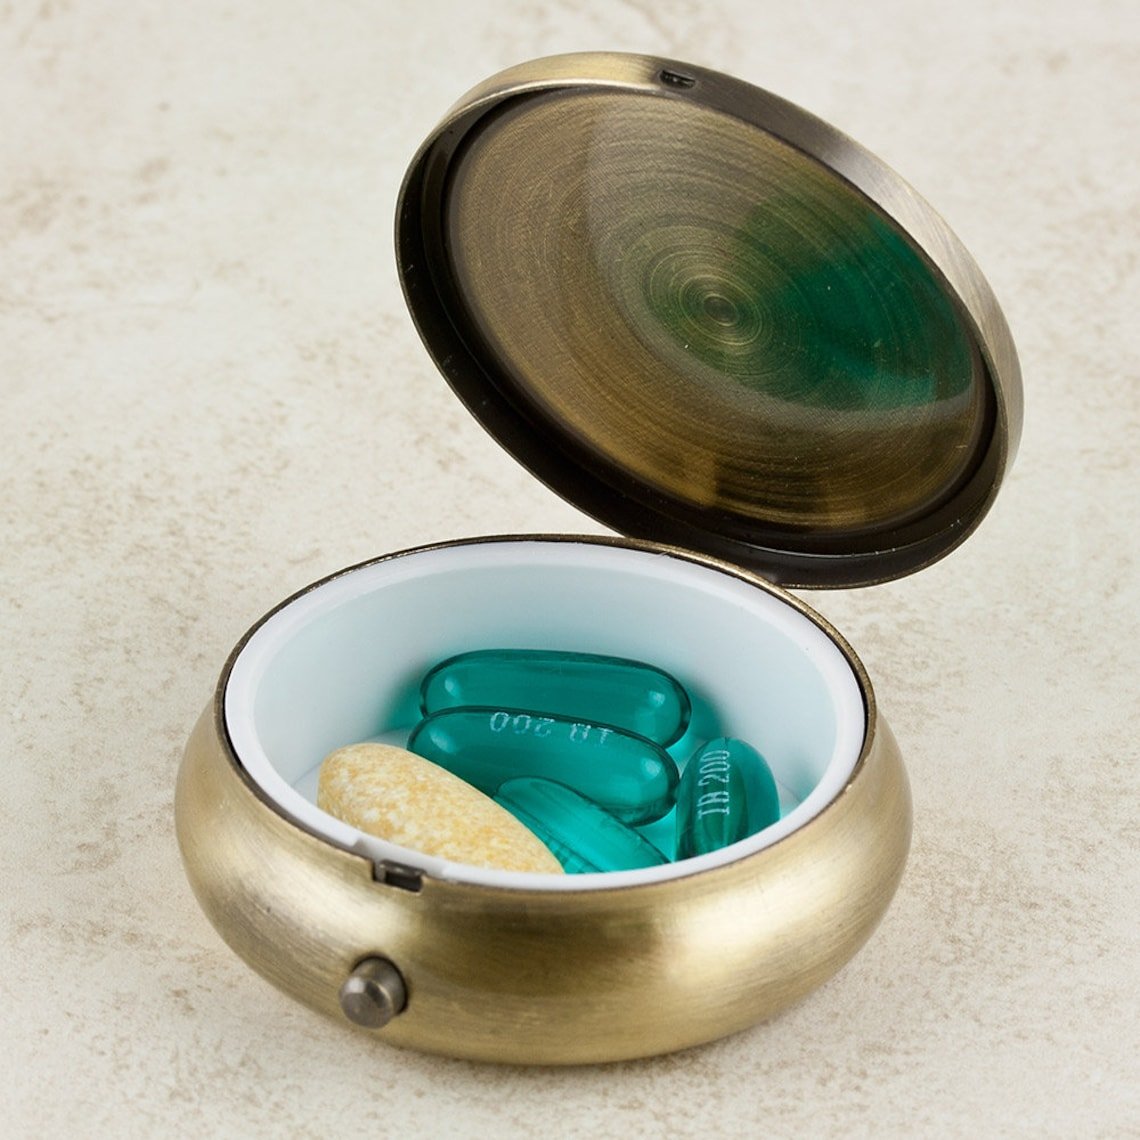  Houder Designer Pill Box - Decorative Pill Case with